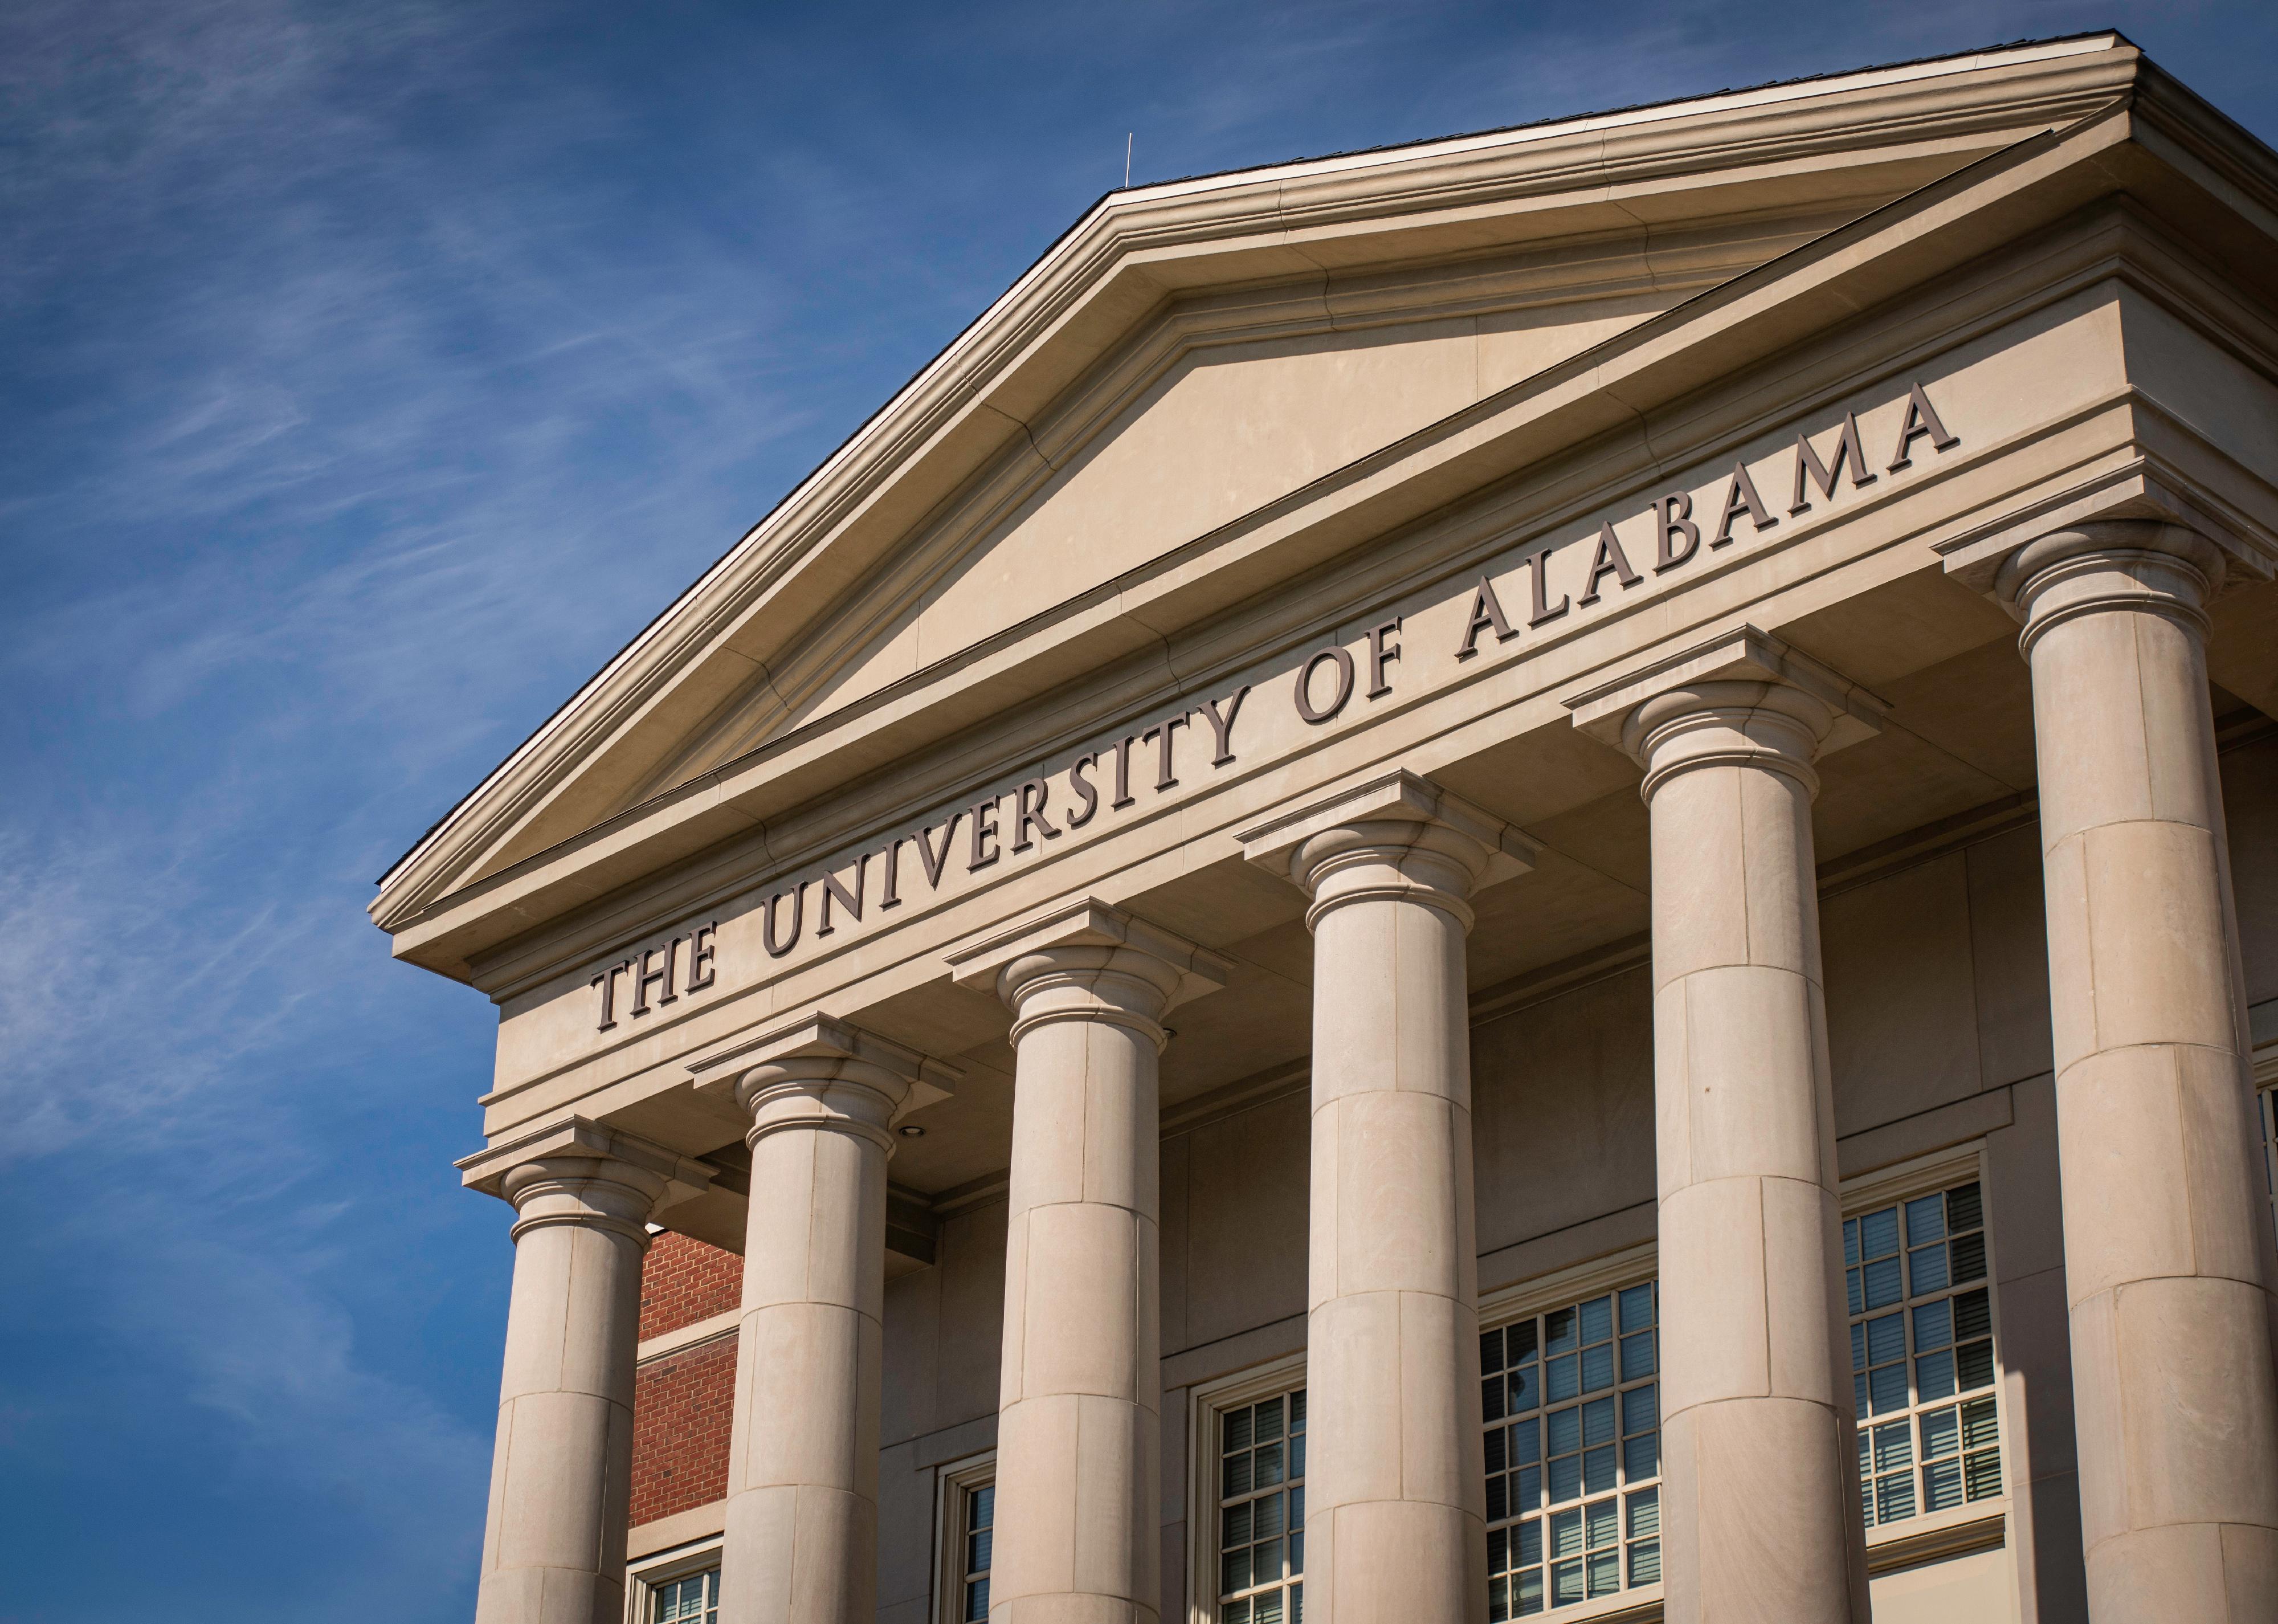 University of Alabama building.